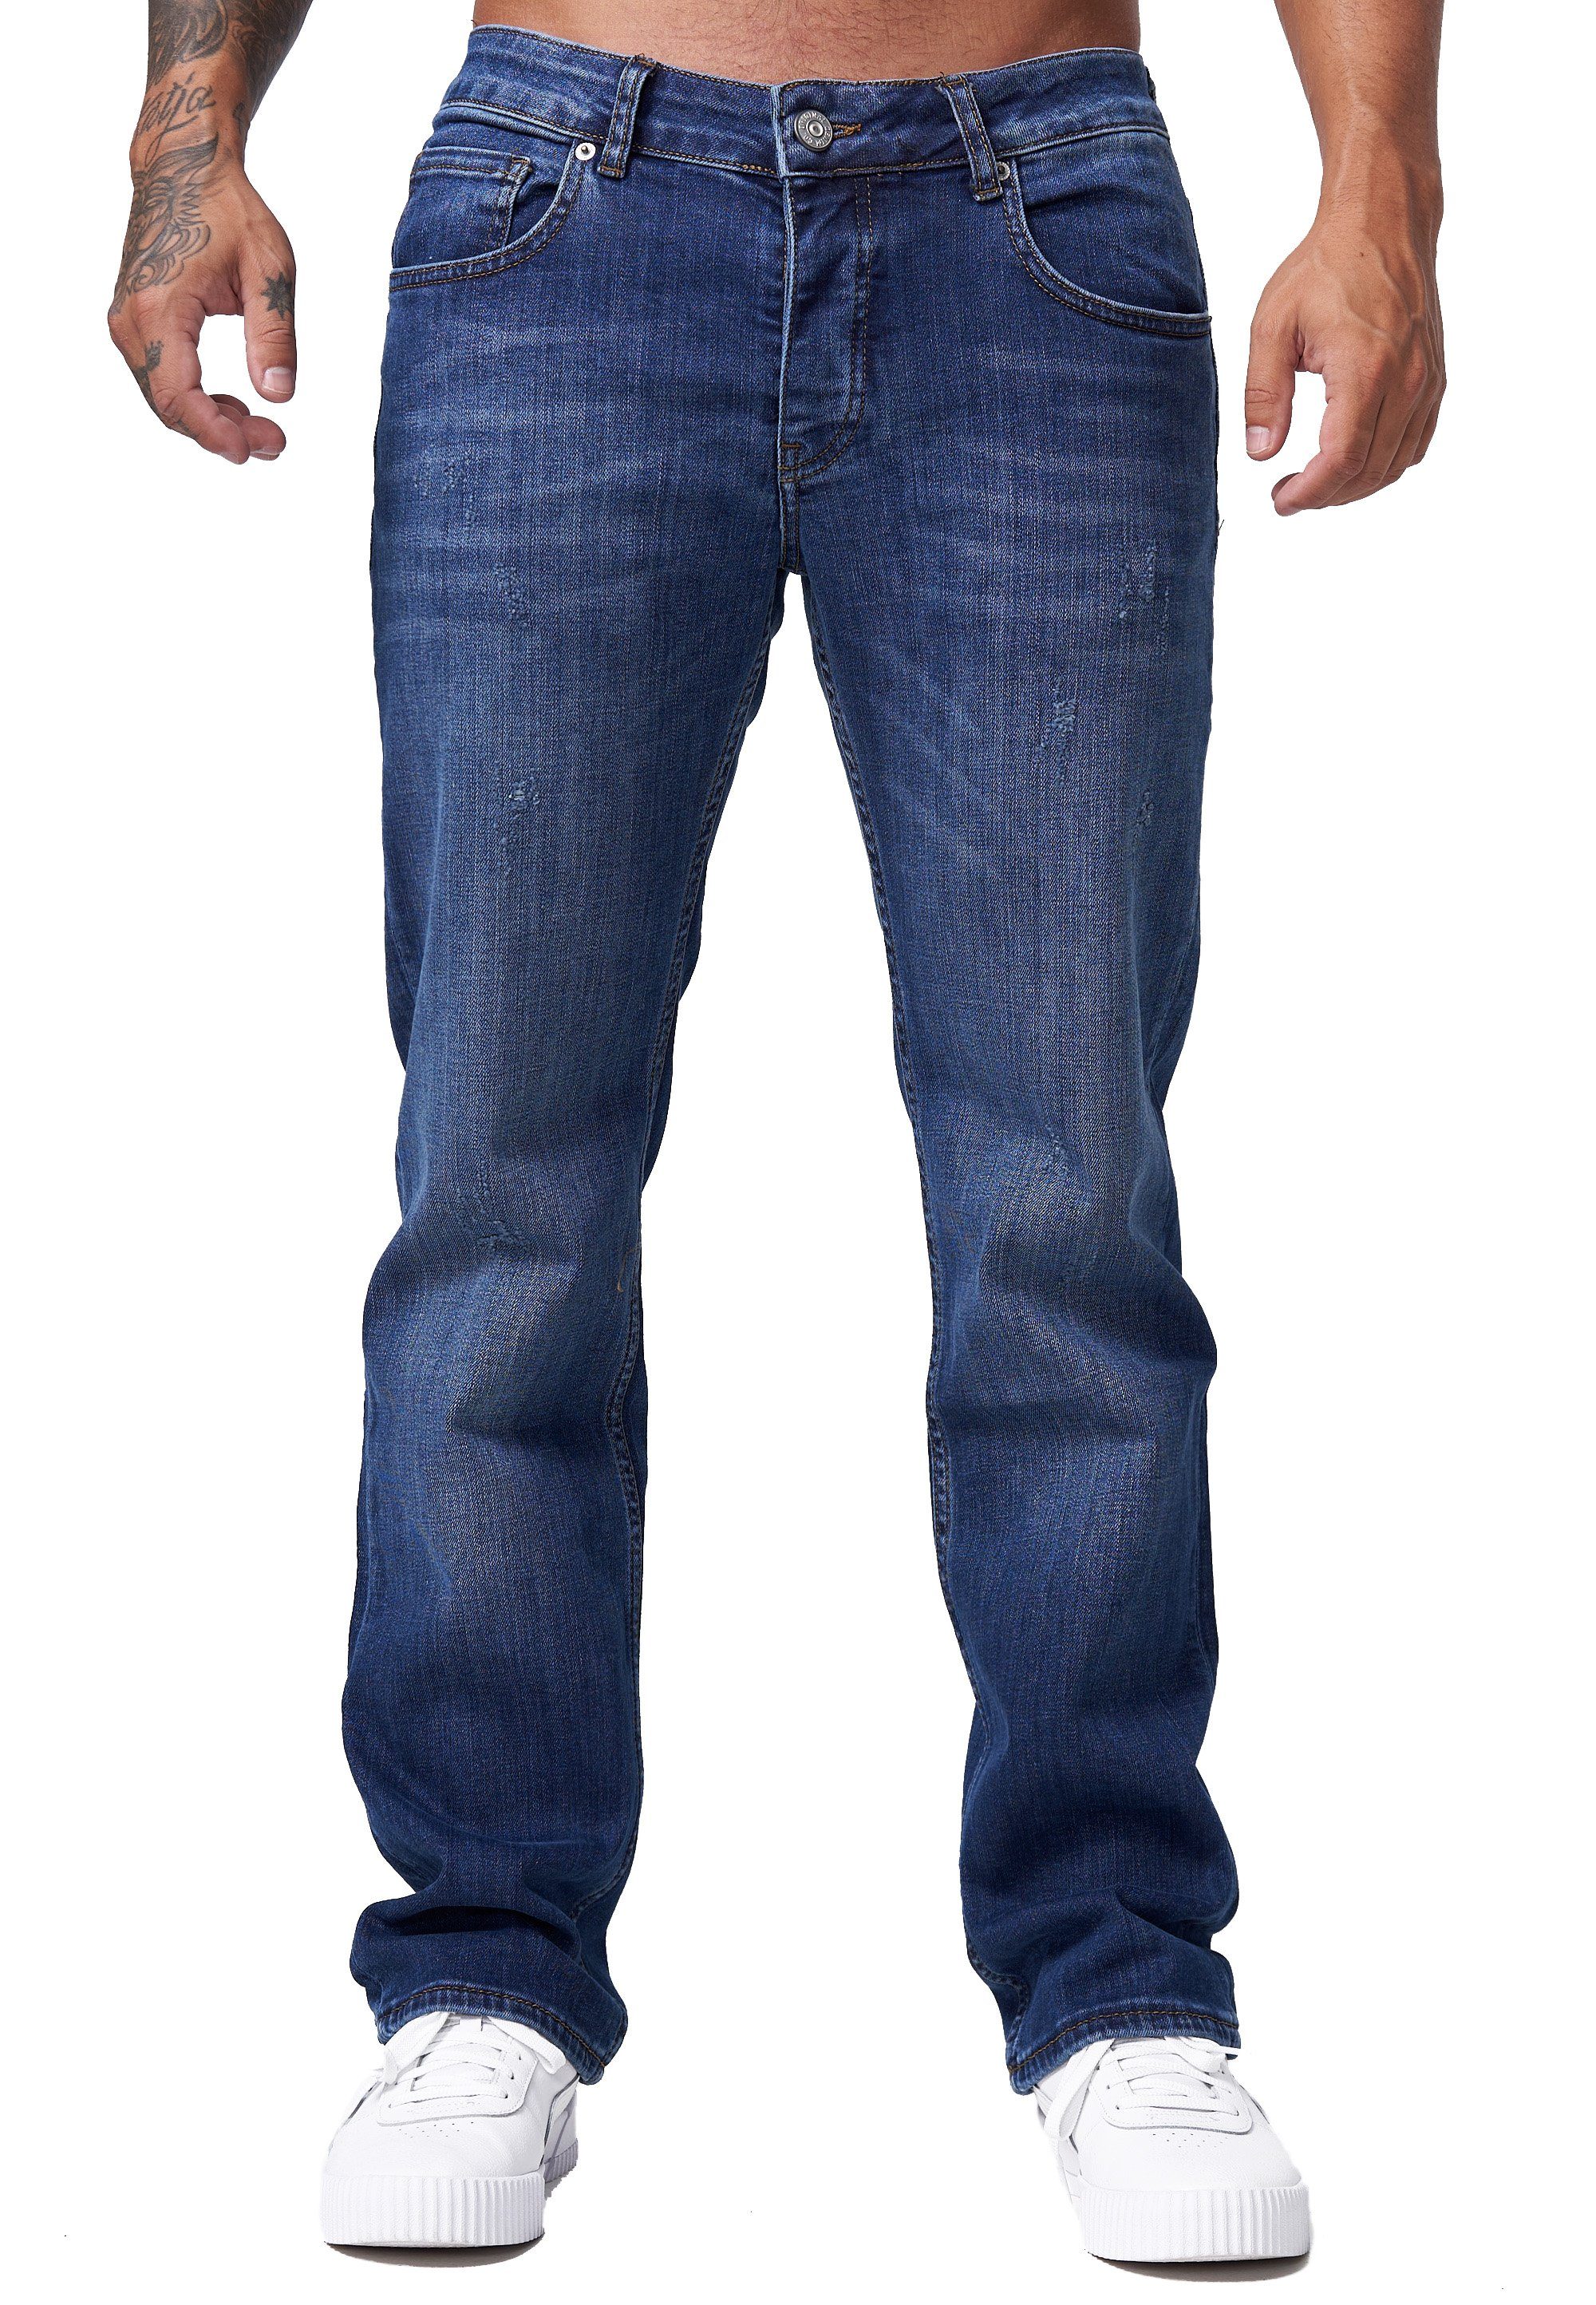 OneRedox Straight-Jeans JS-802 Fitness Freizeit Casual